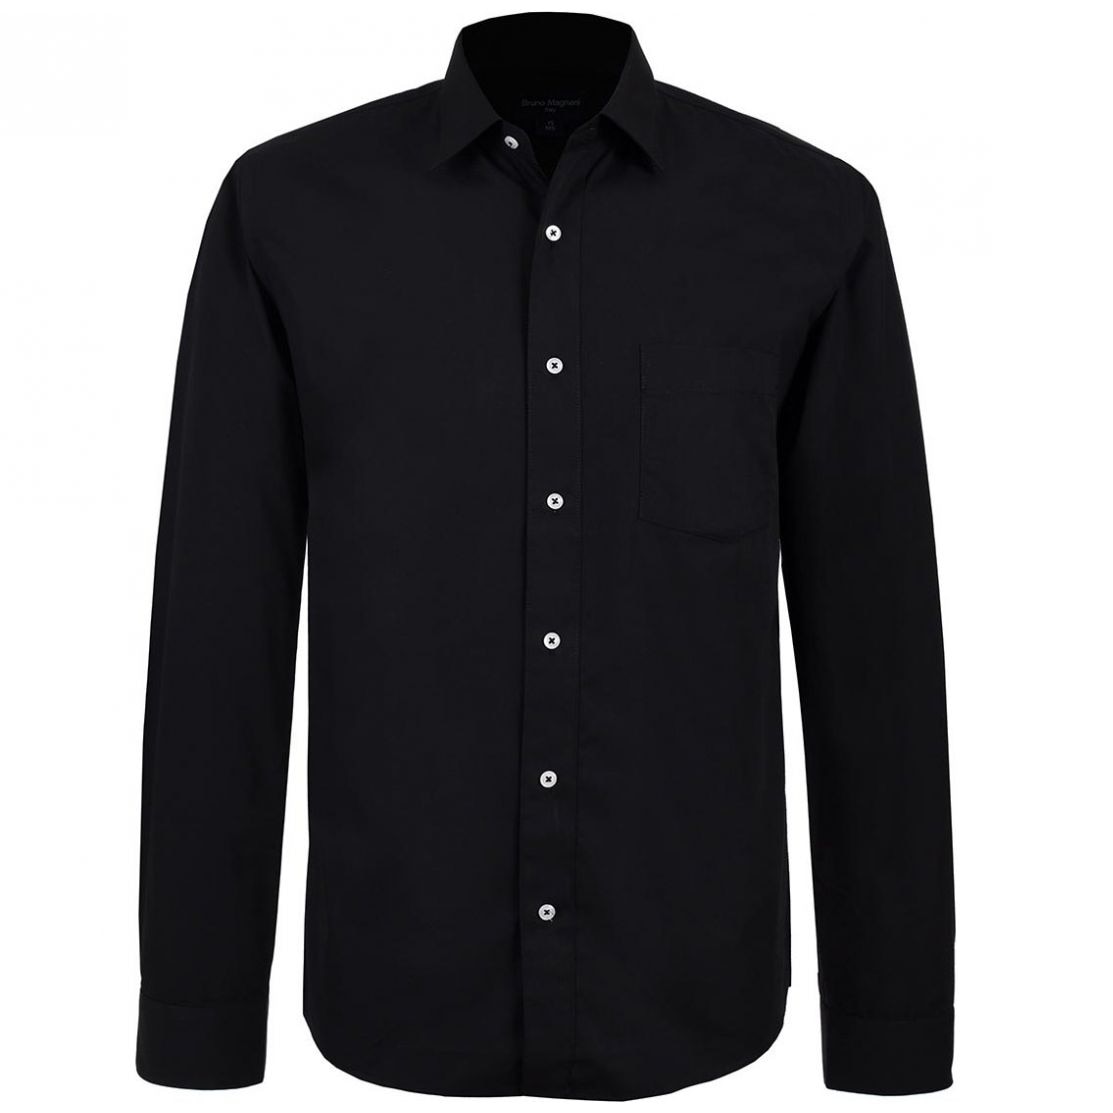 Camisa de Vestir Slim Fit Bruno Magnani Color Negro para Hombre Modelo Elo Bm85000Ng